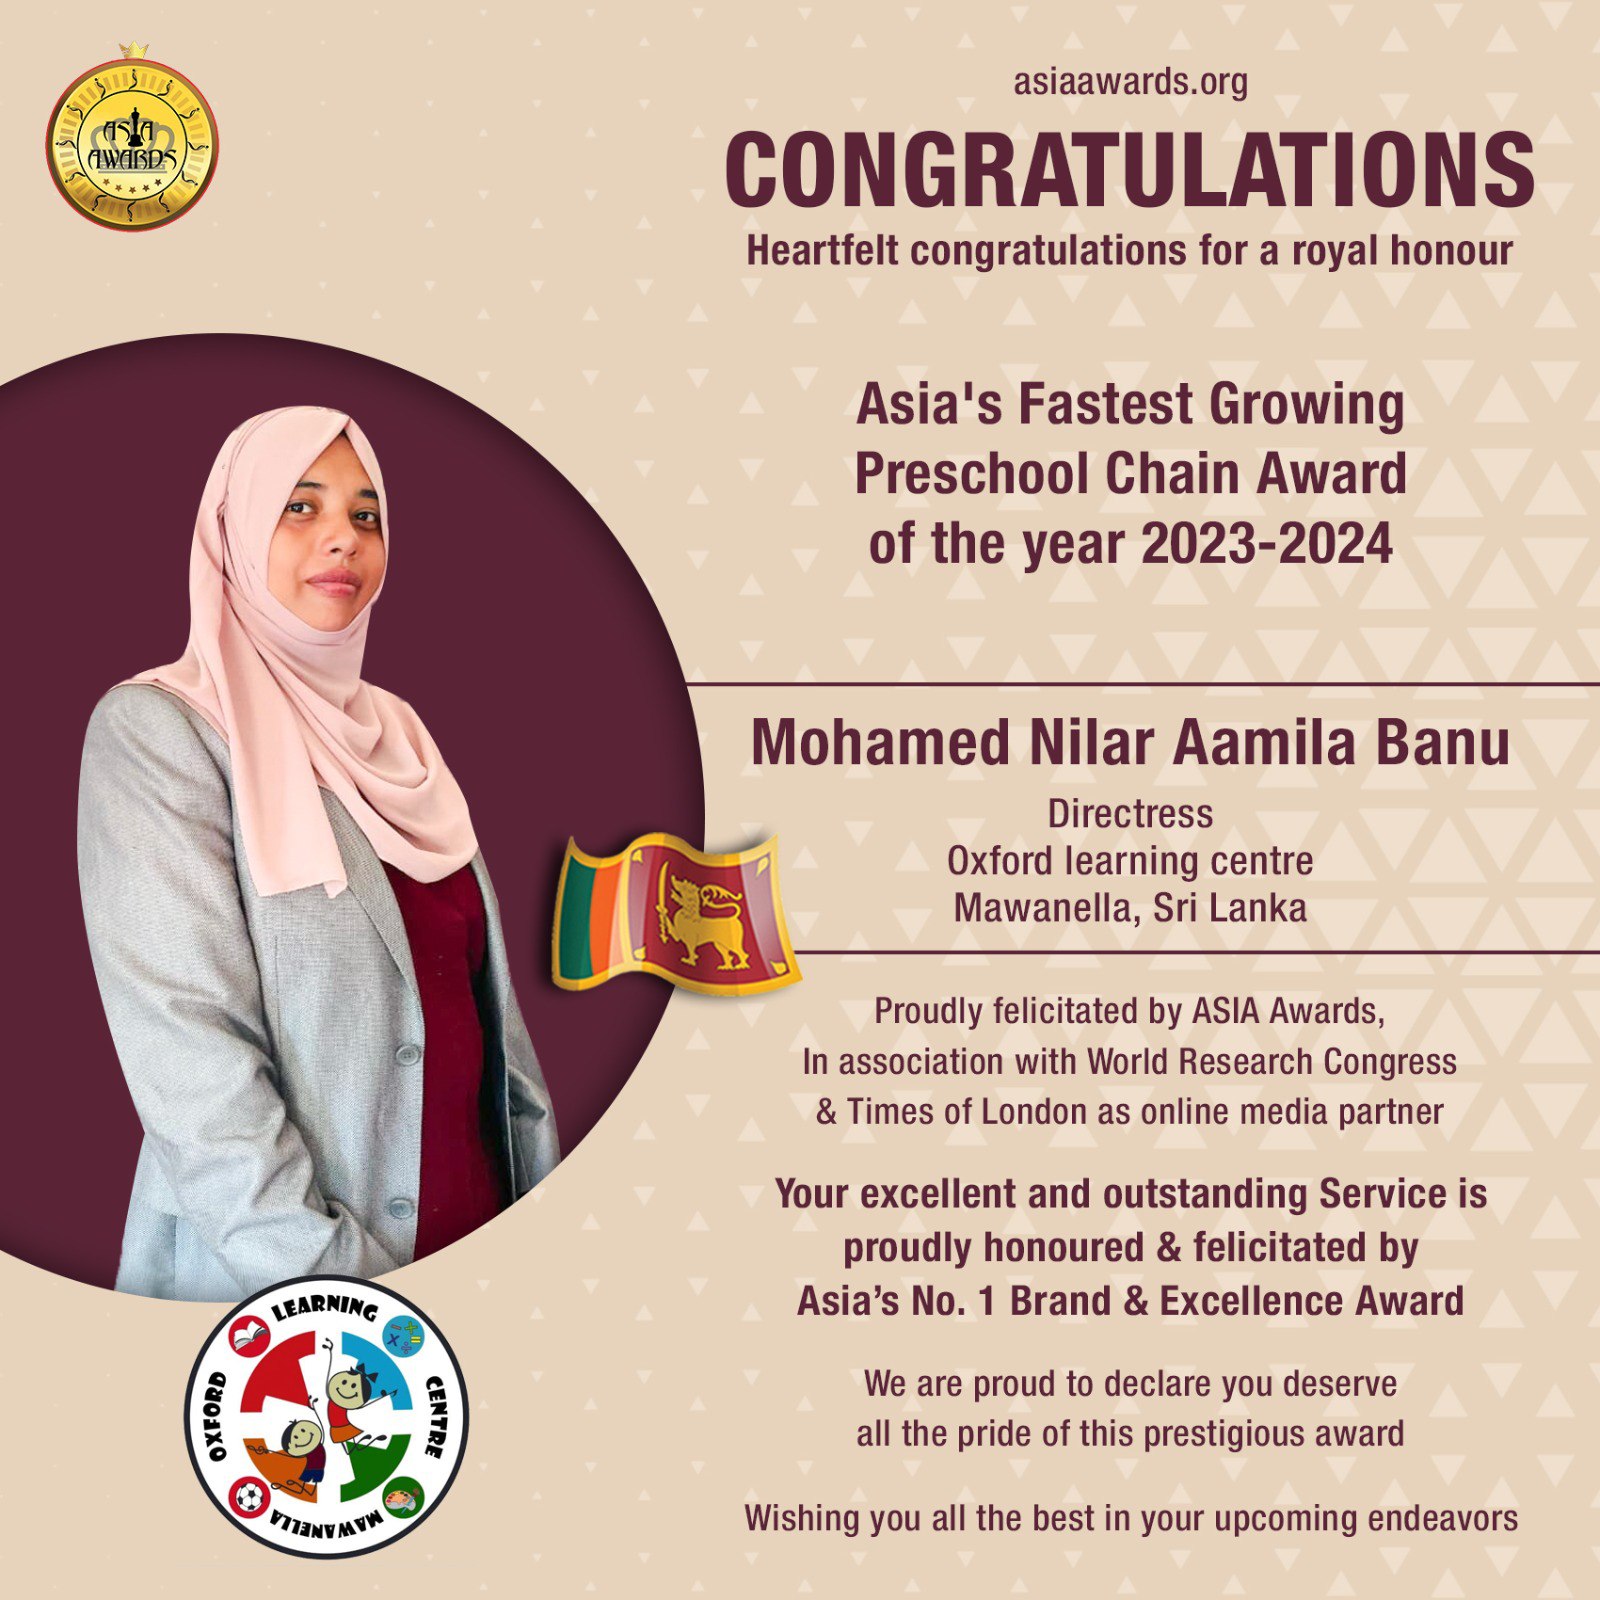 Mohamed Nilar Aamila Banu Has bagged Asia's Fastest Growing Preschool Chain Award